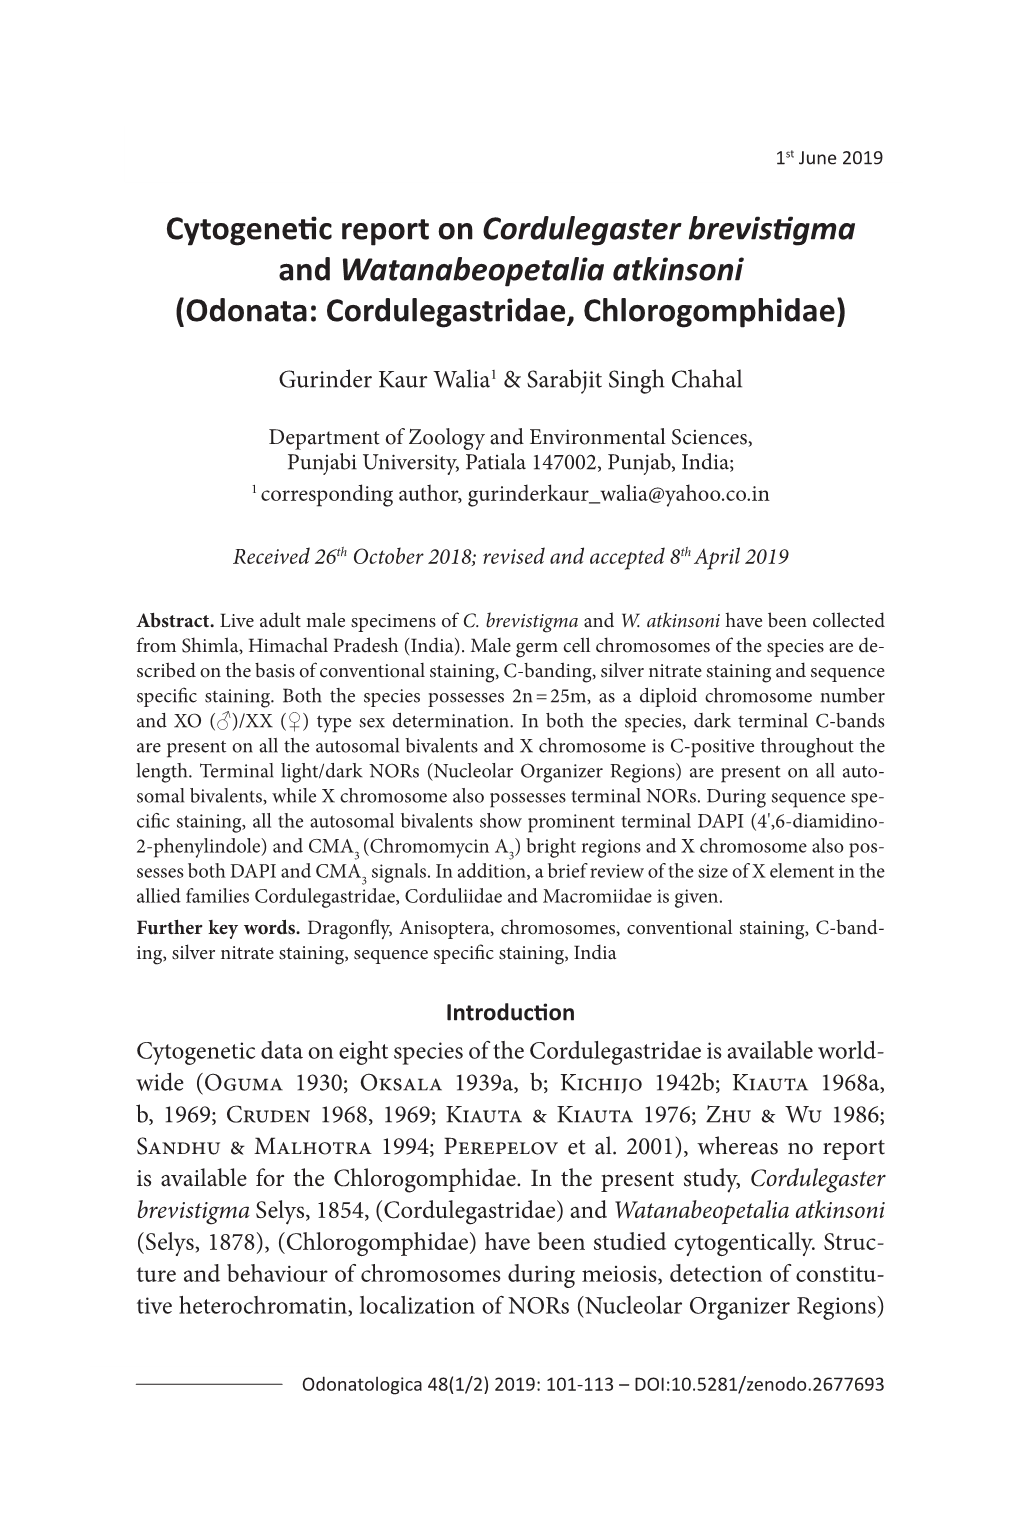 Cytogenetic Report on Cordulegaster Brevistigma and Watanabeopetalia Atkinsoni1st June 2019101